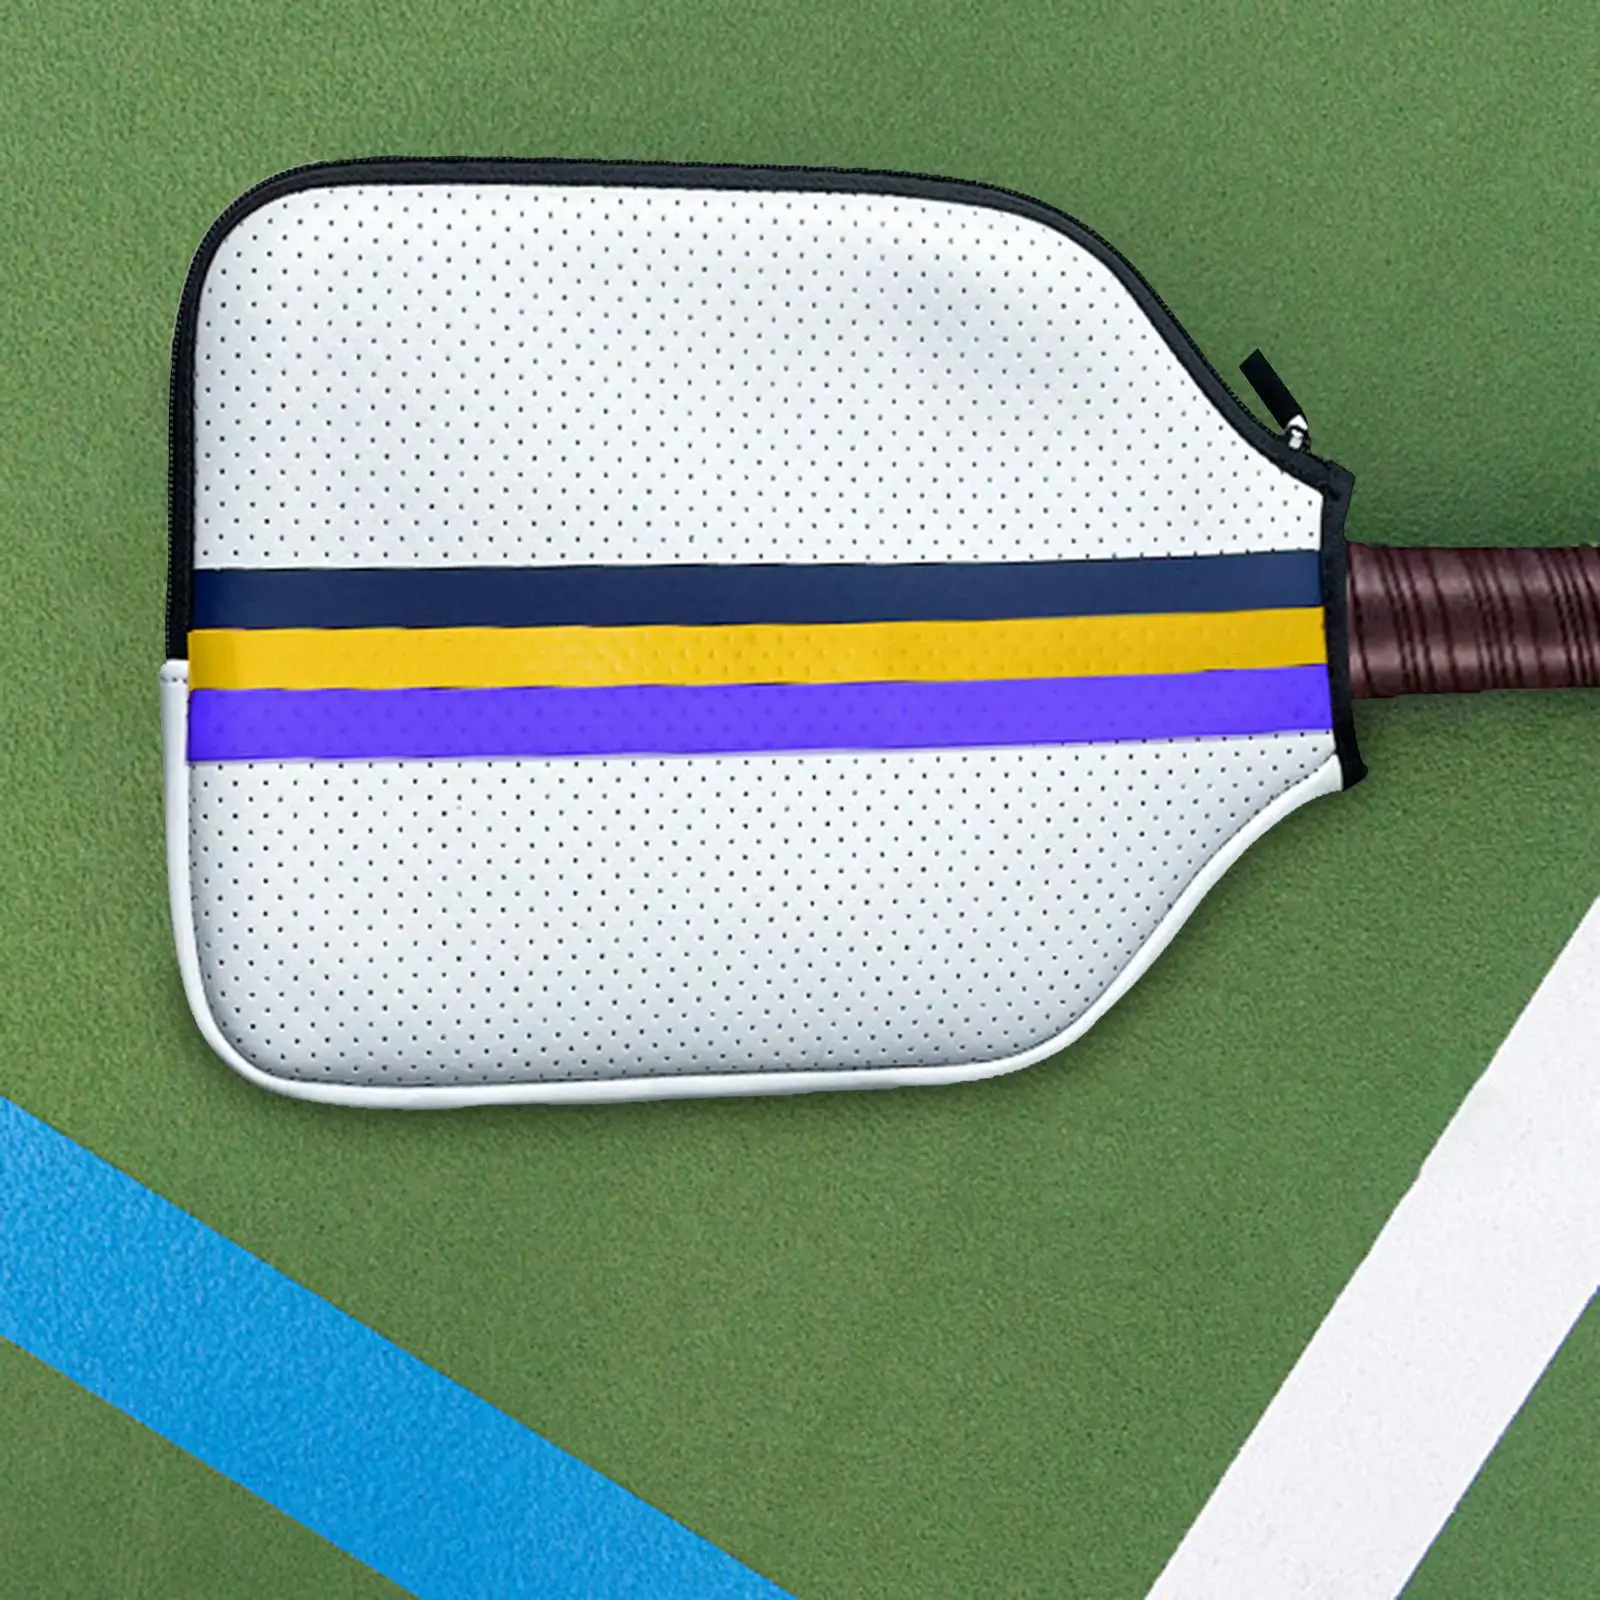 Neoprene Pickleball Paddle Cover Racket Sleeve Pouch Gift Racket Case Holder Pickleball Head Cover for Outdoor Sports Practice